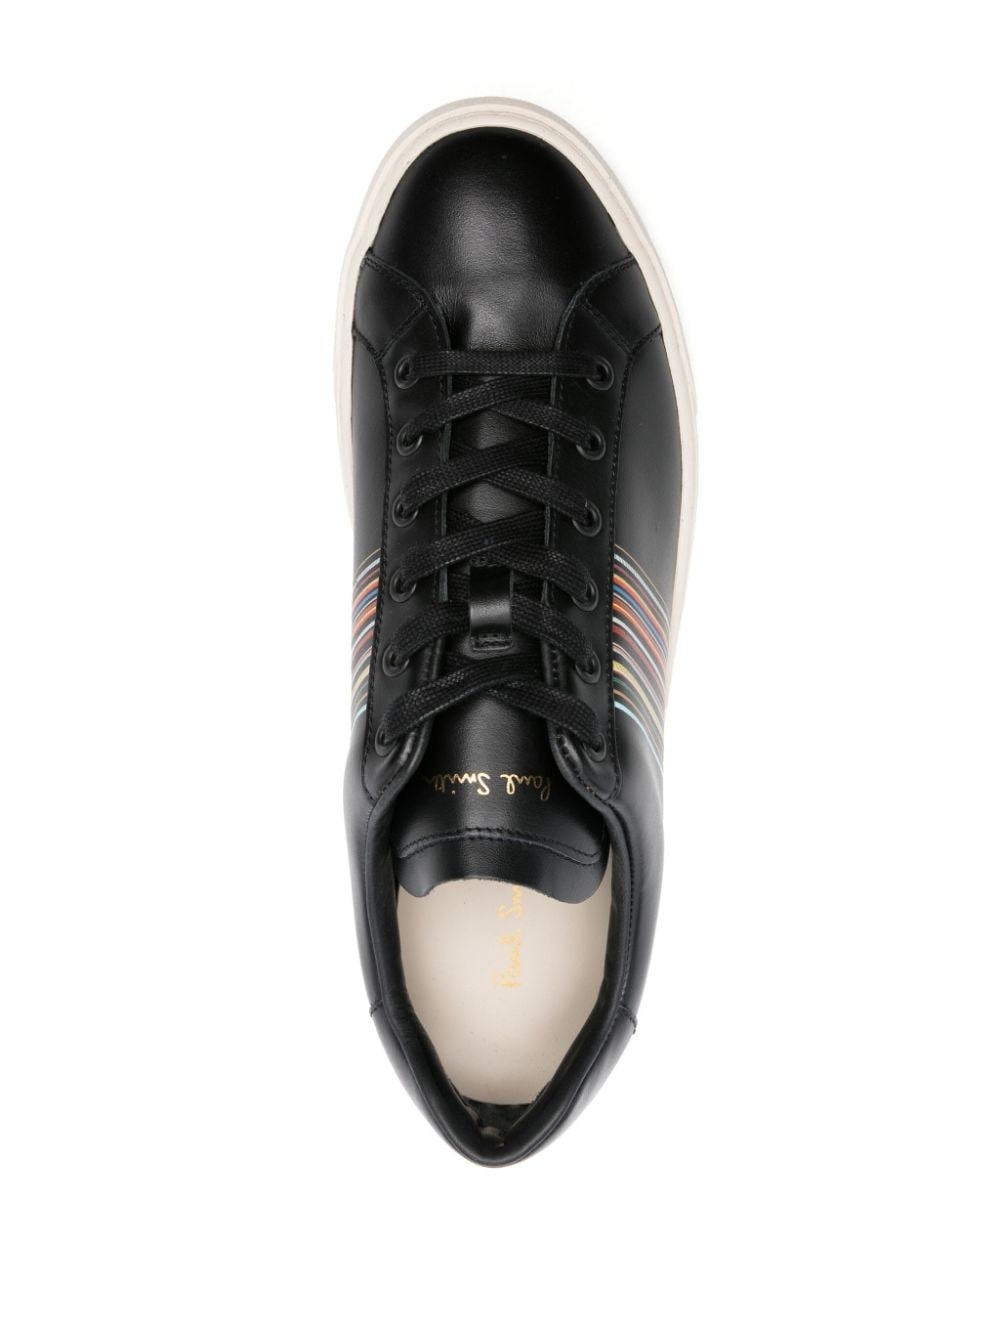 Hansen leather sneakers - 4